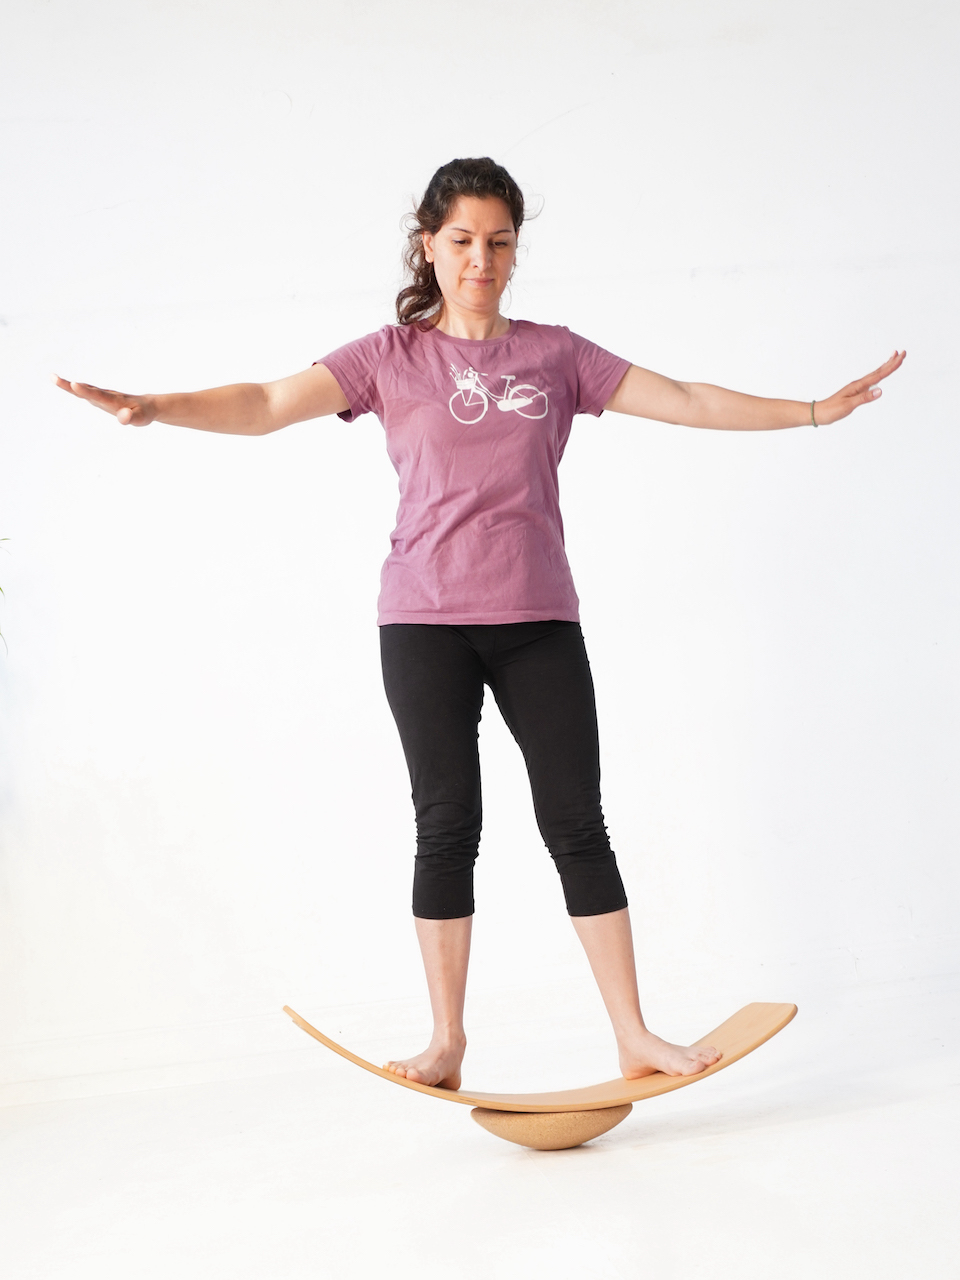 extremes balance training auf balance board